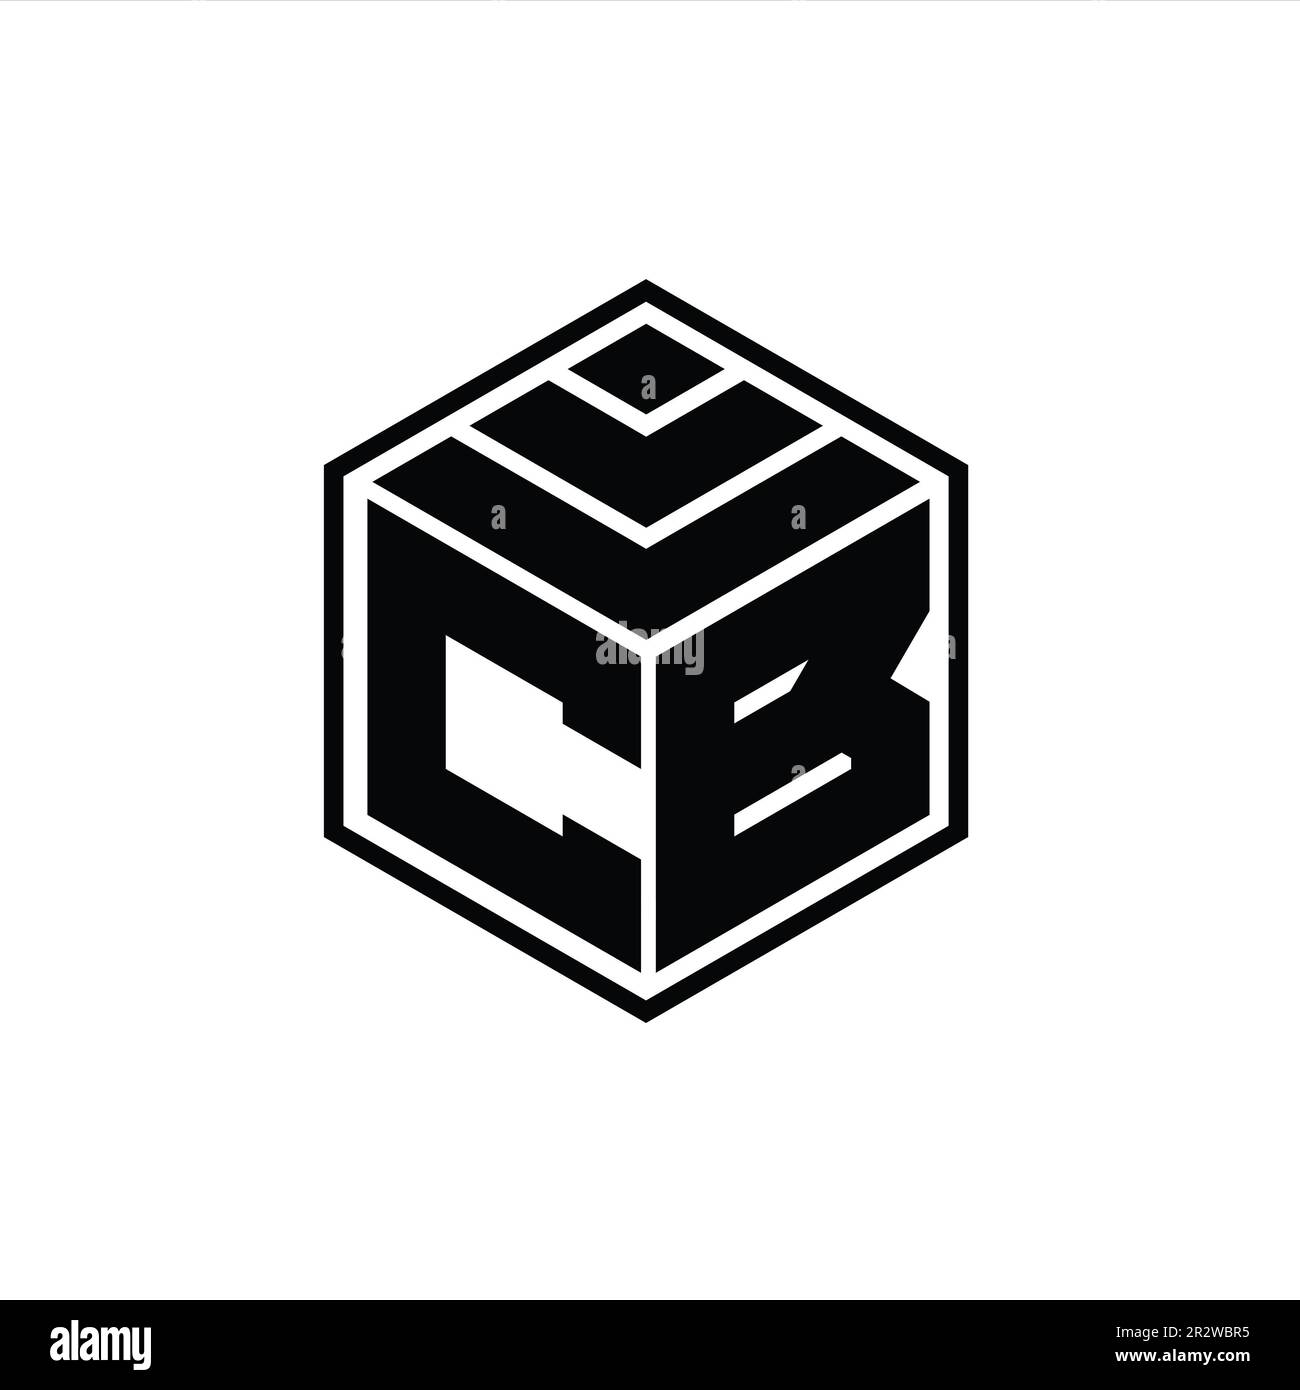 Cb logo Black and White Stock Photos & Images - Alamy